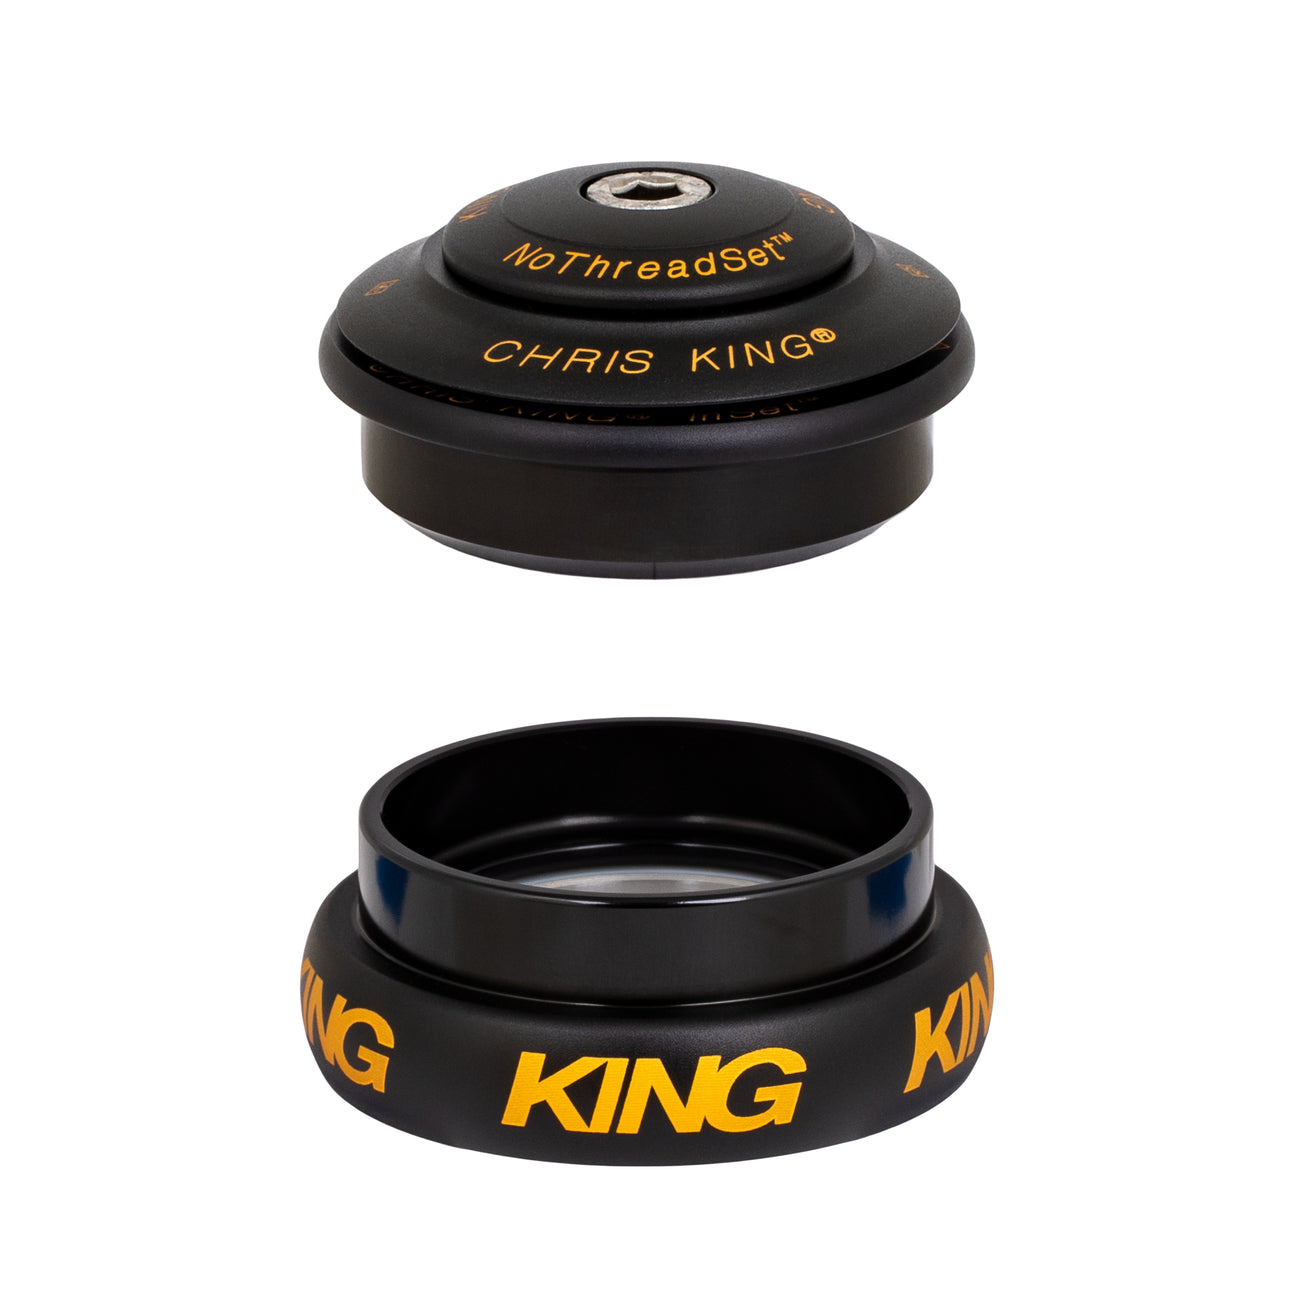 Chris King inset 8 headset in black/gold